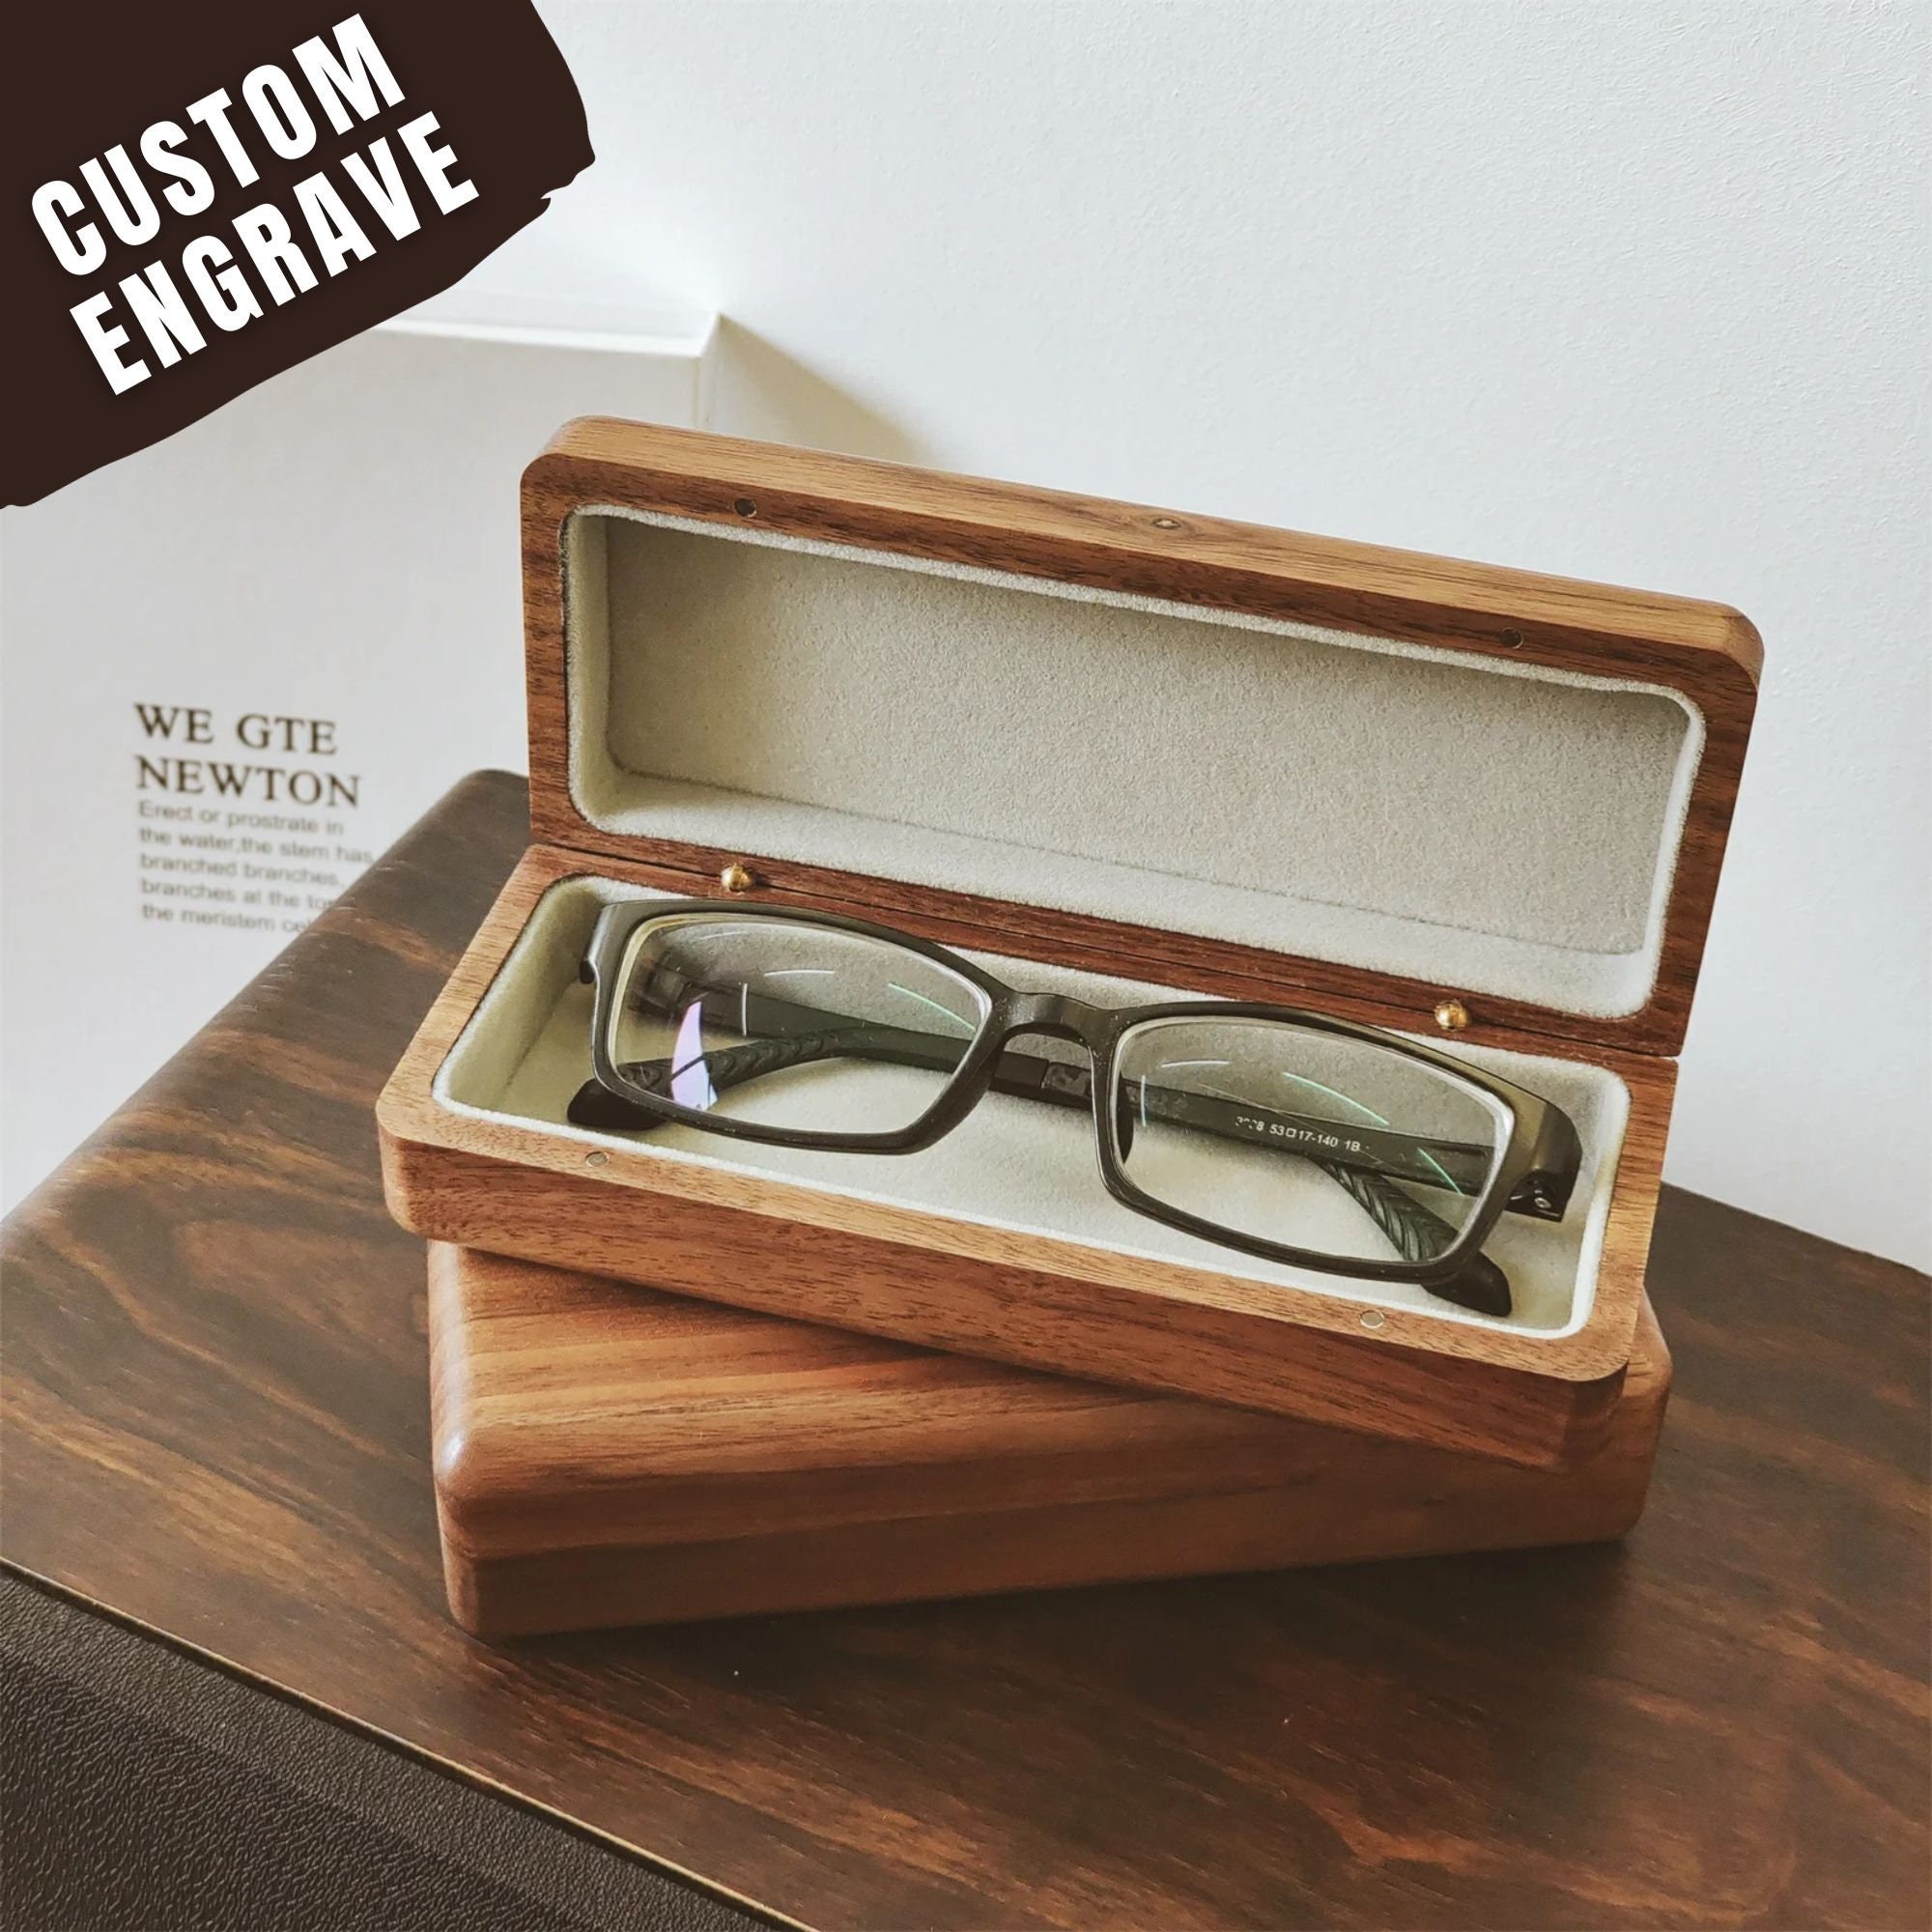 Cute Glasses Case Box Transparent Carry Box Eyewear Sunglasses Hard  Accessoires